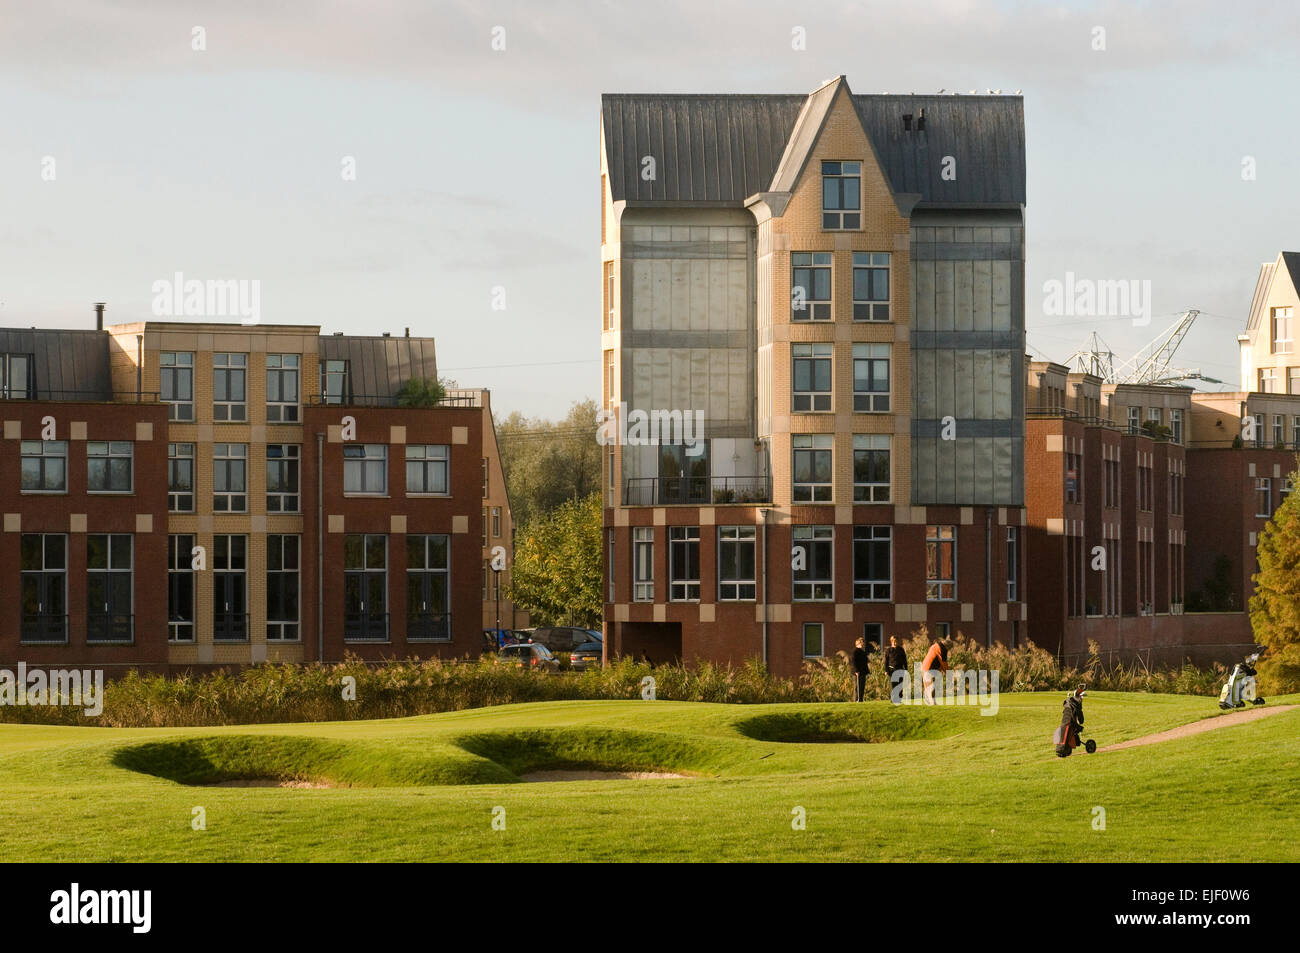 Dalienwaerd: neo rationalism architecture in North Brabant, Netherlands. The wild living. Stock Photo